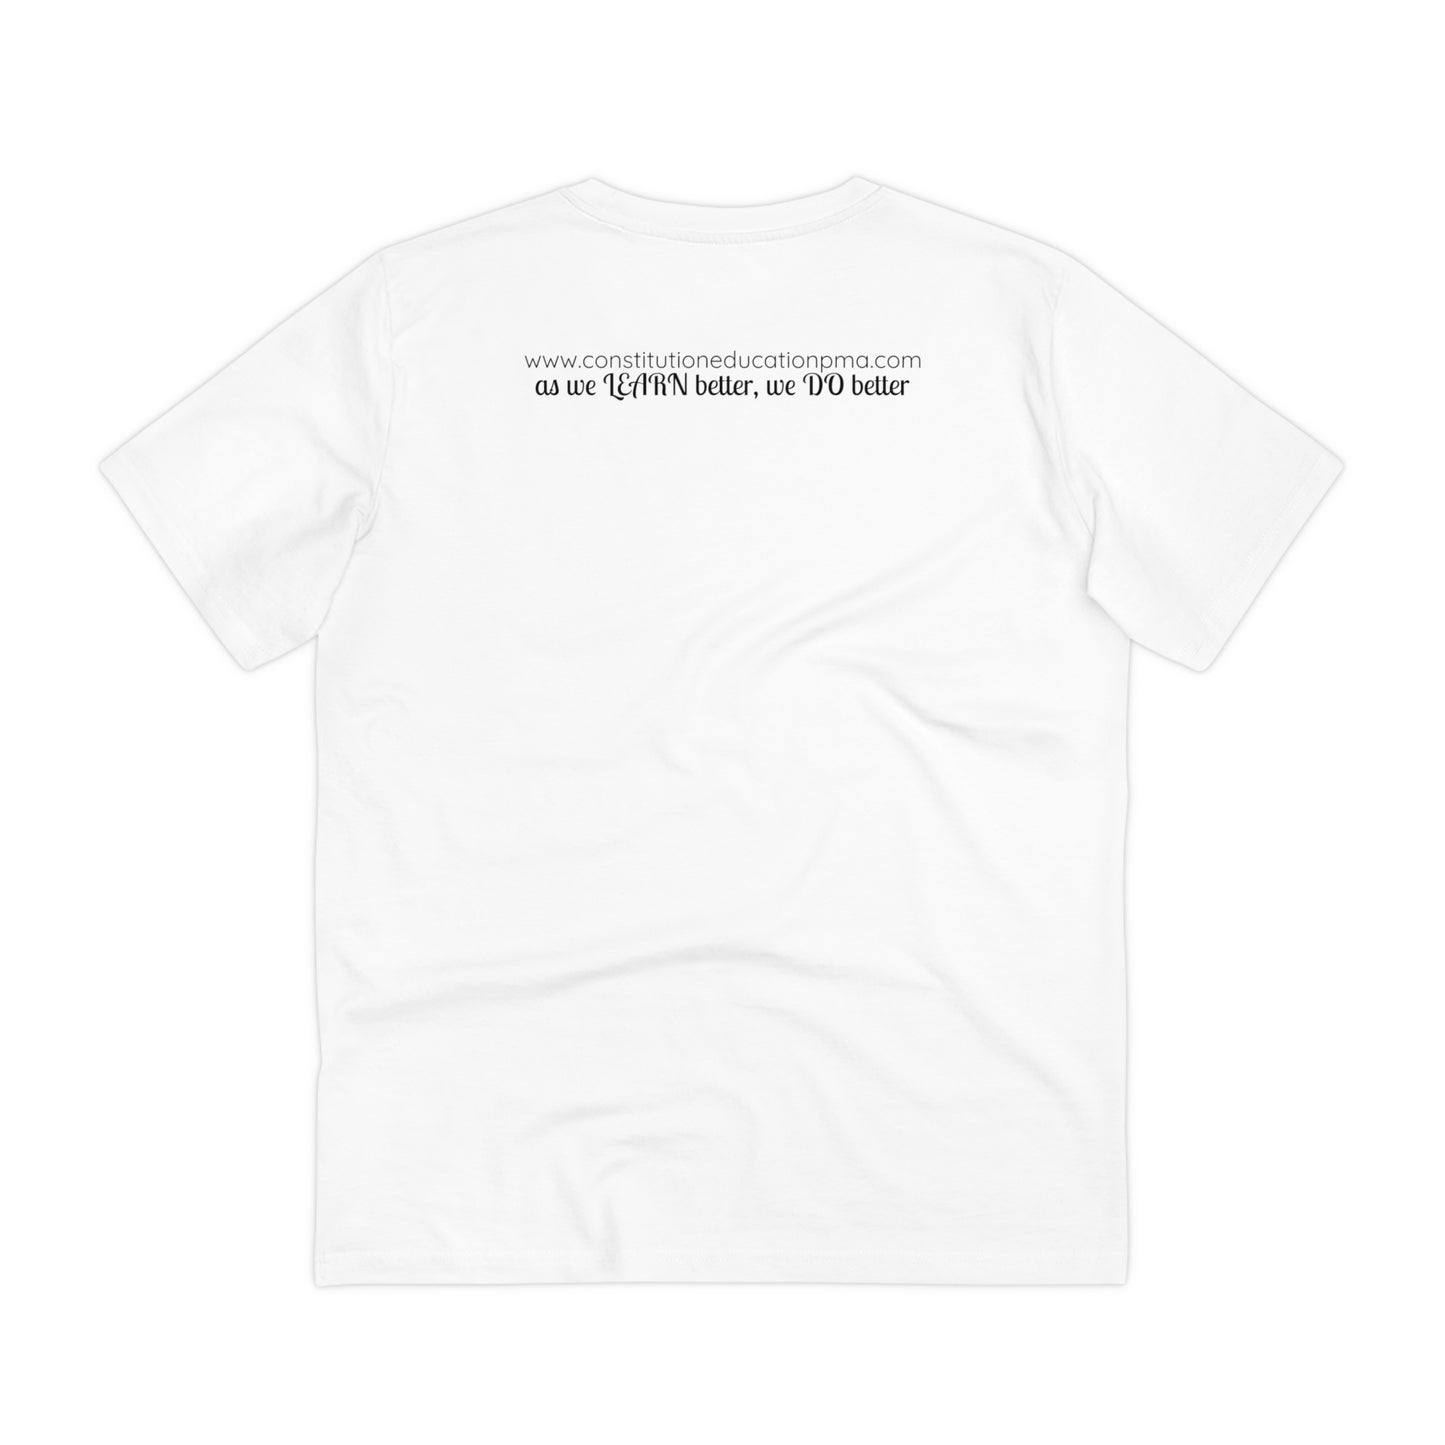 American State National - " New York "   **Organic Crew T-shirt **